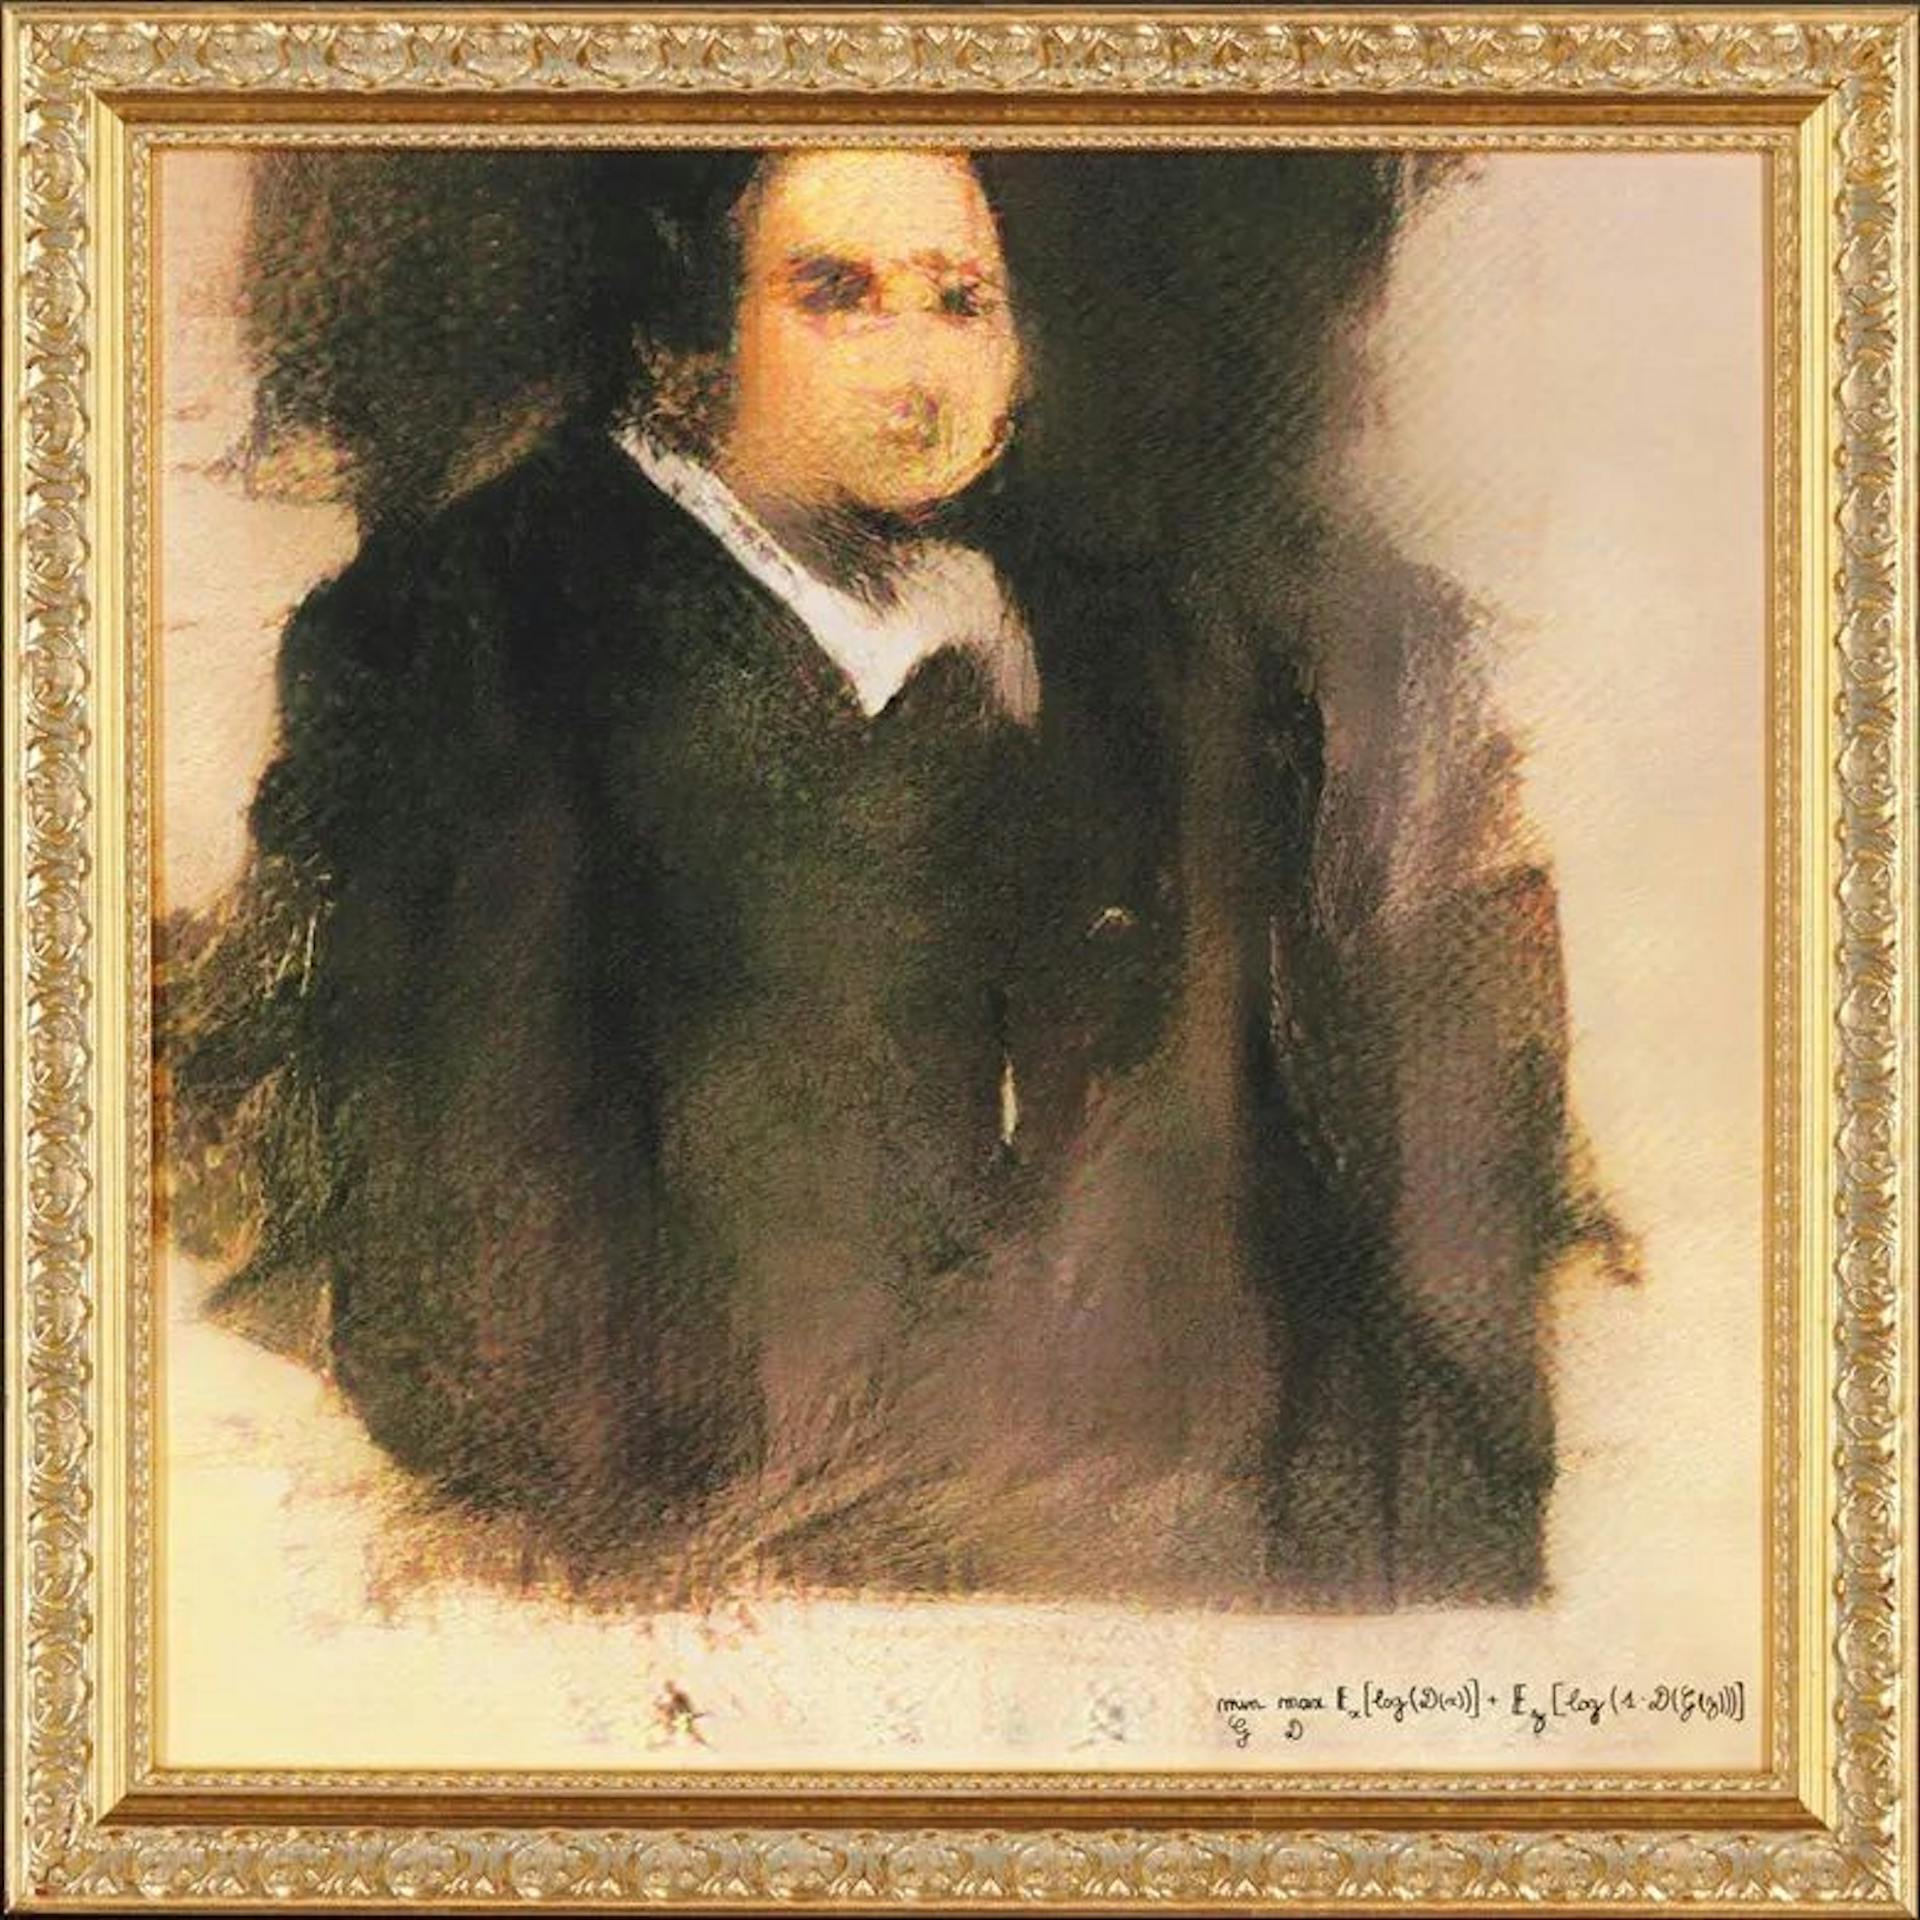 Edmond de Belamy 的肖像，佳士得以 432,500 美元的价格售出的第一幅人工智能肖像。谁得功劳？人还是机器？